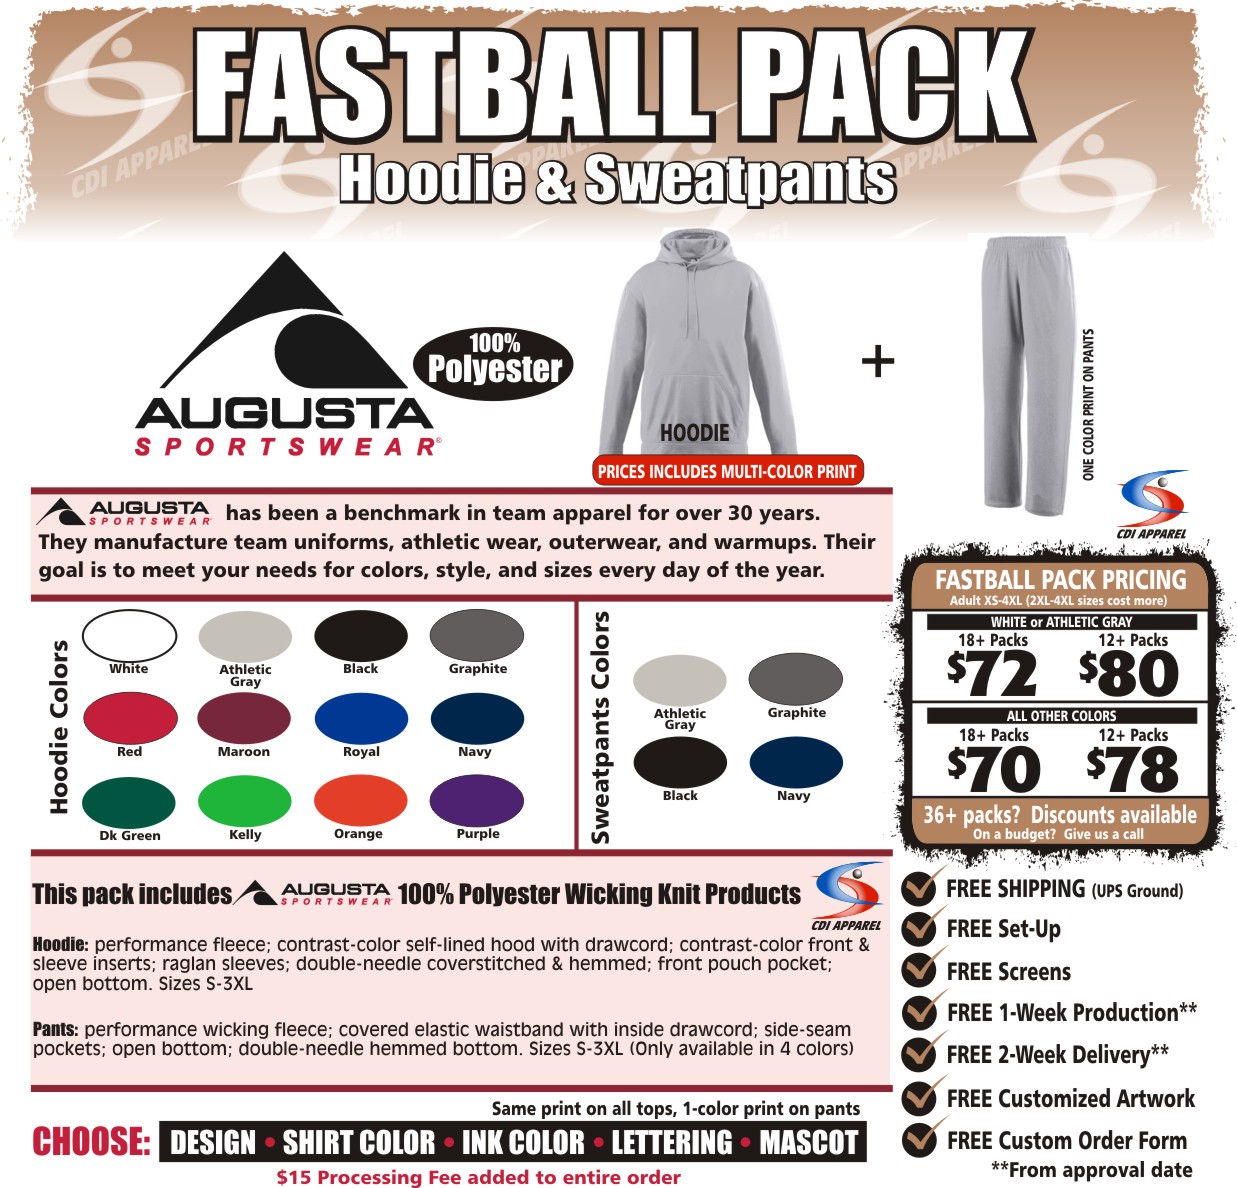 Fastball Pack (Cool Down) Baseball 2017 Augusta